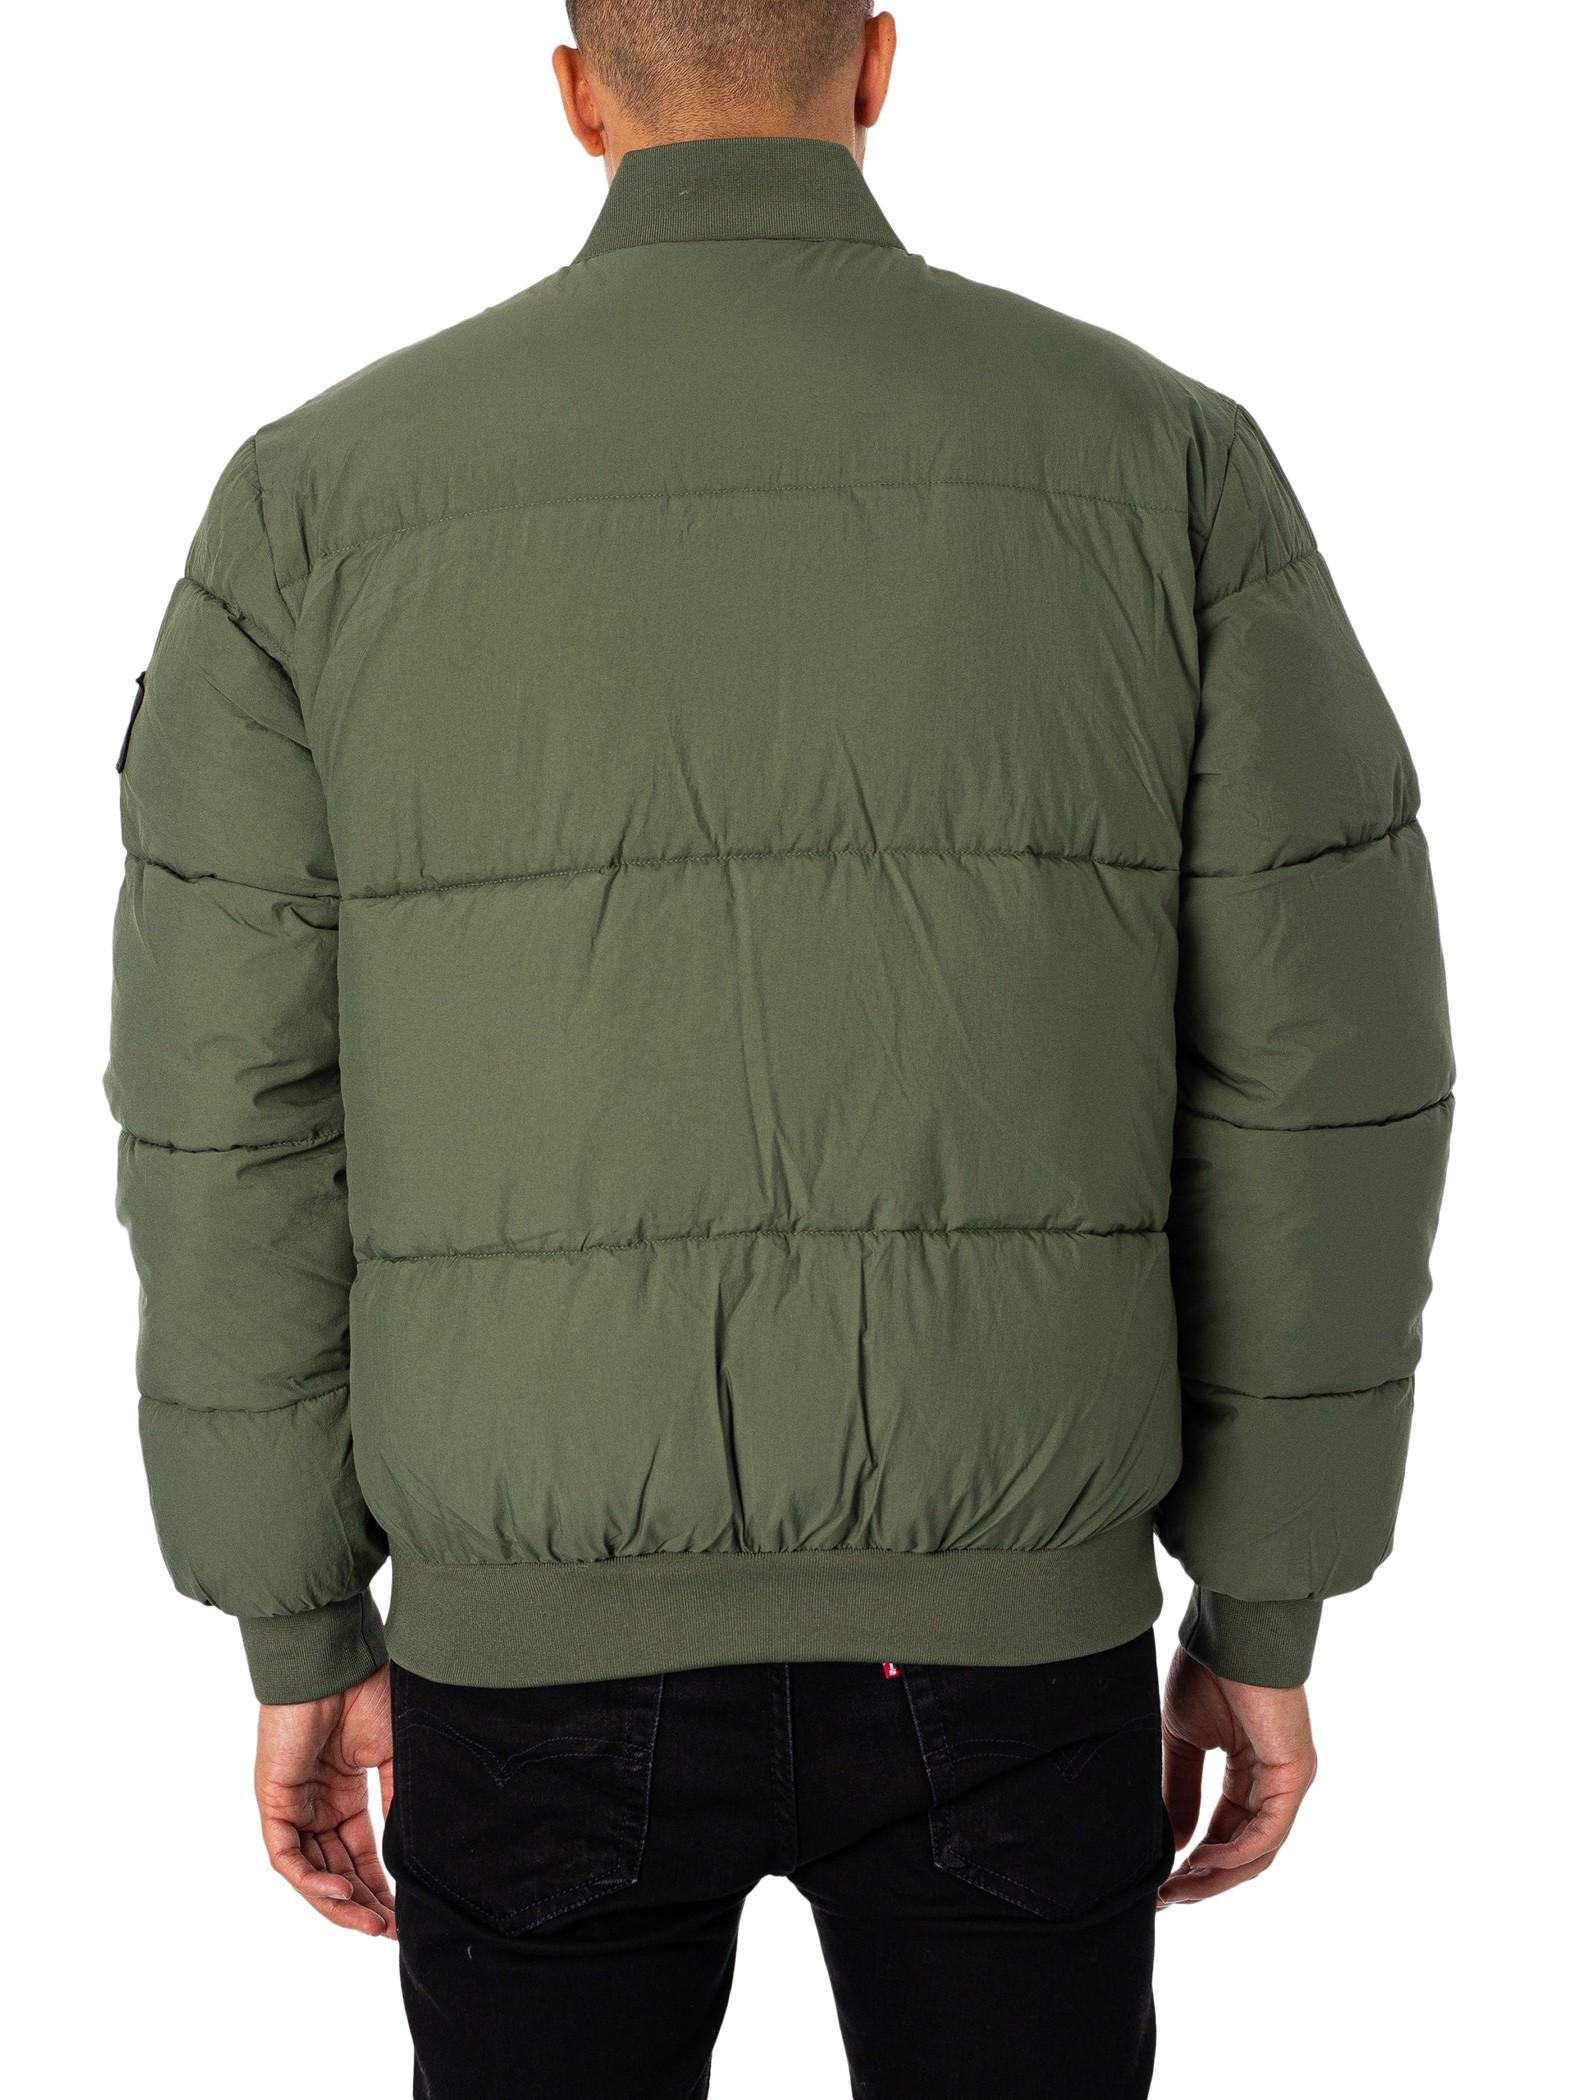 Green Calvin Lyst in Commercial Klein Bomber Jeans for Jacket | Men